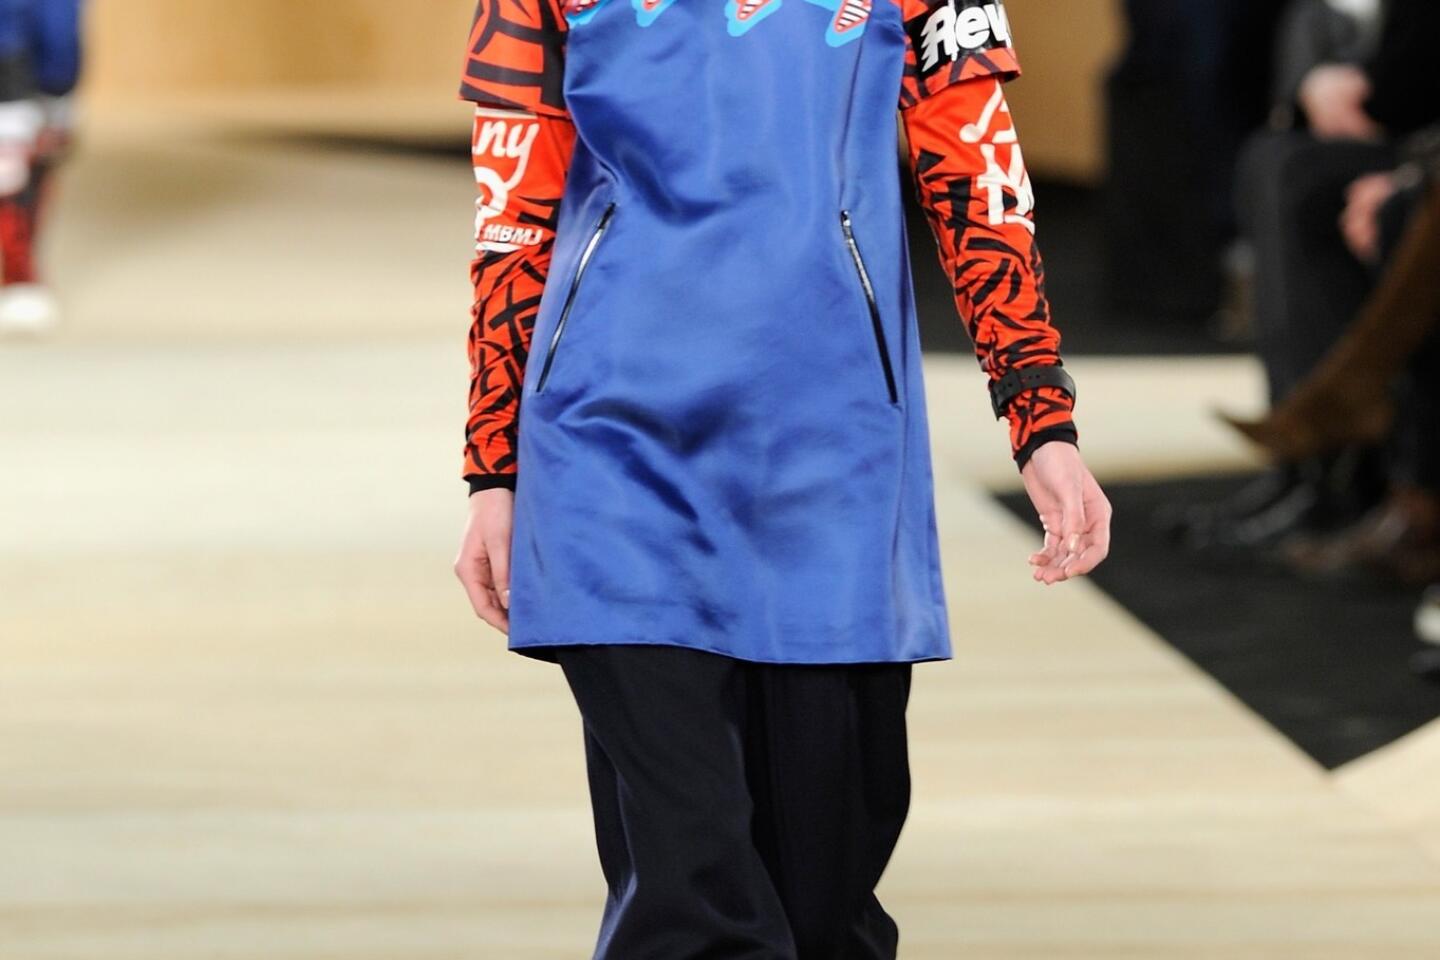 Fashion and Textile. Louis Vuitton - Marc Jacobs